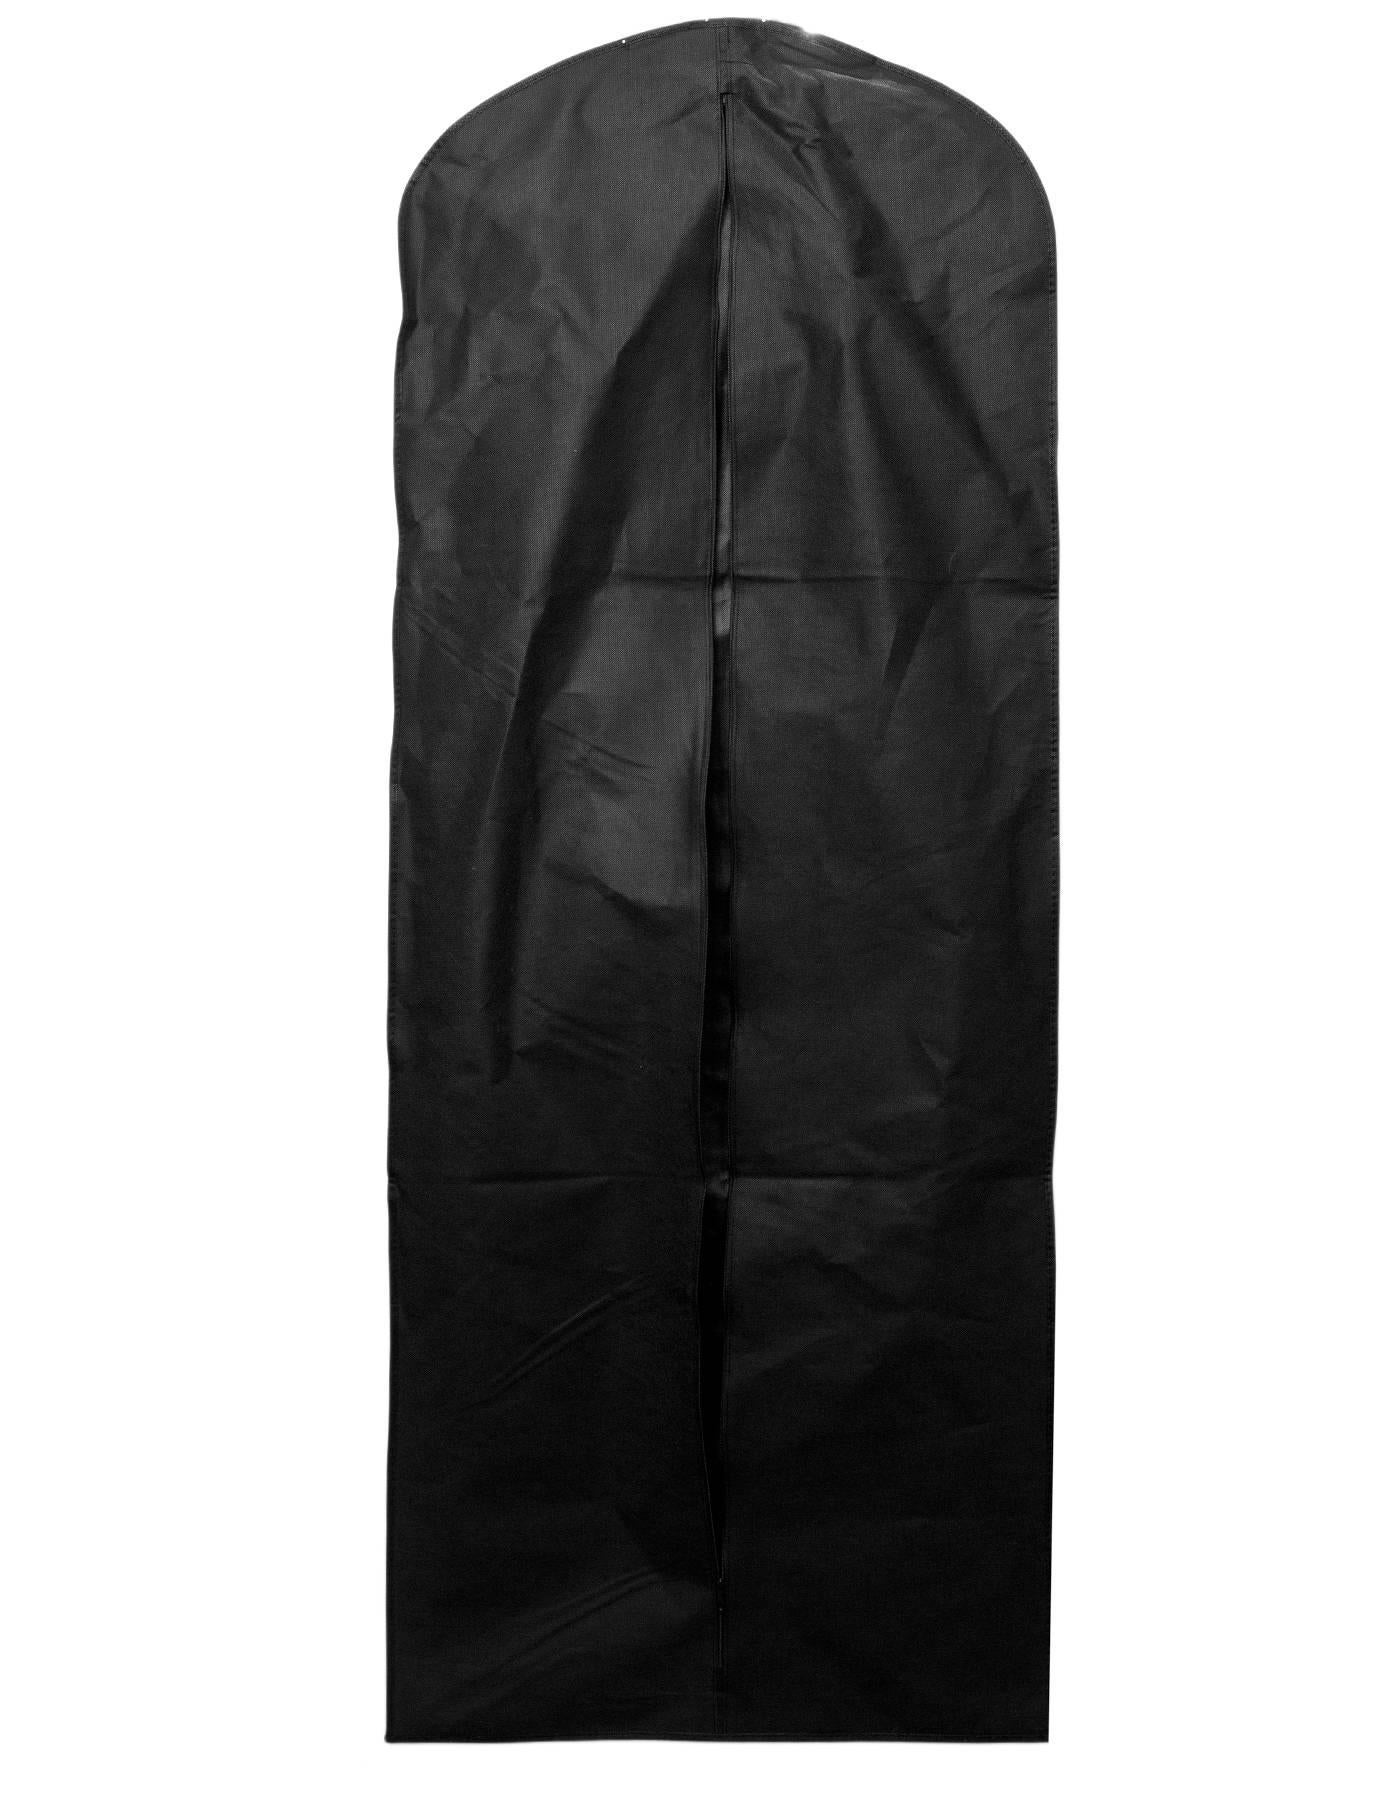 Marchesa 2017 Black Velvet Off The Shoulder Evening Dress Sz 8 NWT rt. $3, 000 3